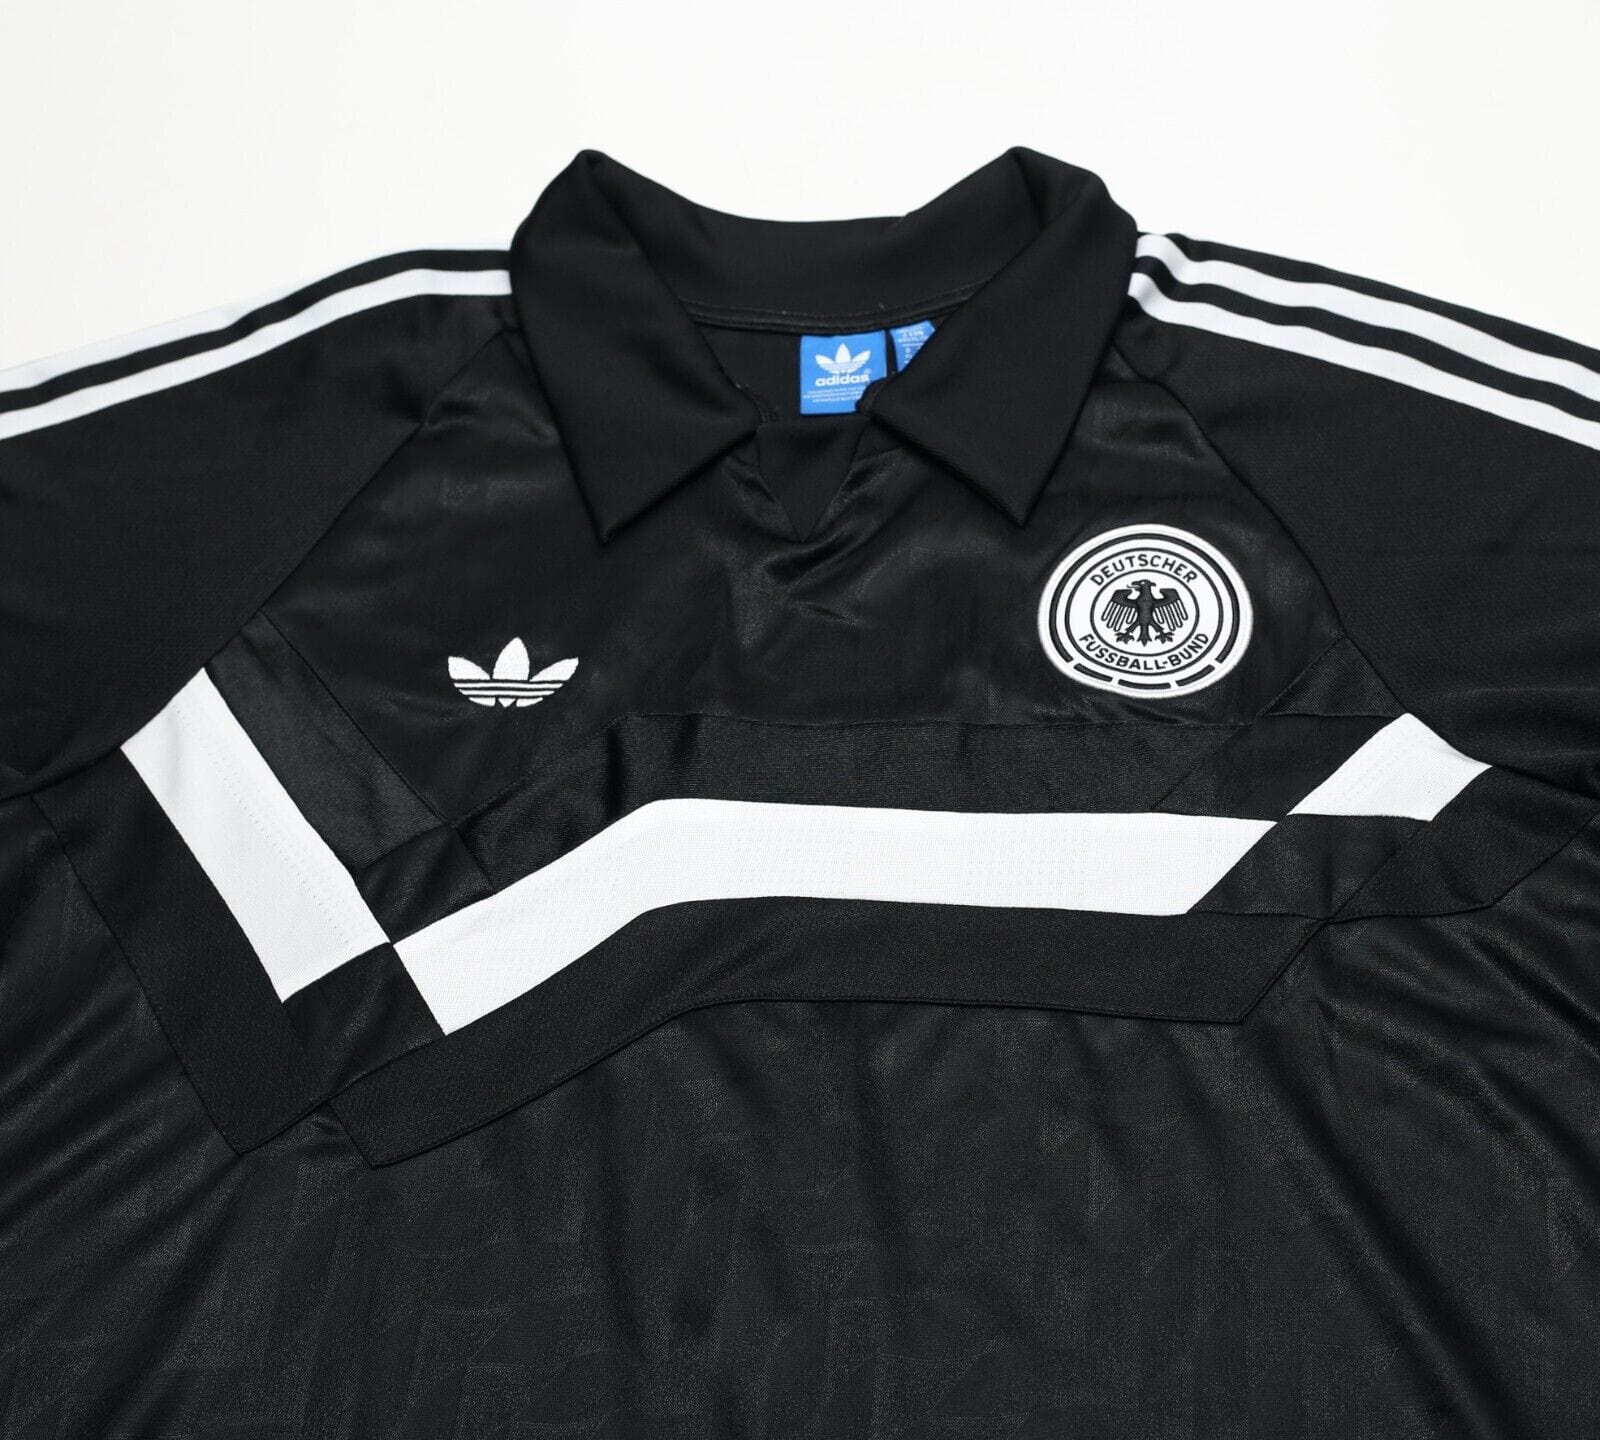 1988/91 WEST GERMANY Italia 90 Retro adidas Originals Football Shirt (L/XL)